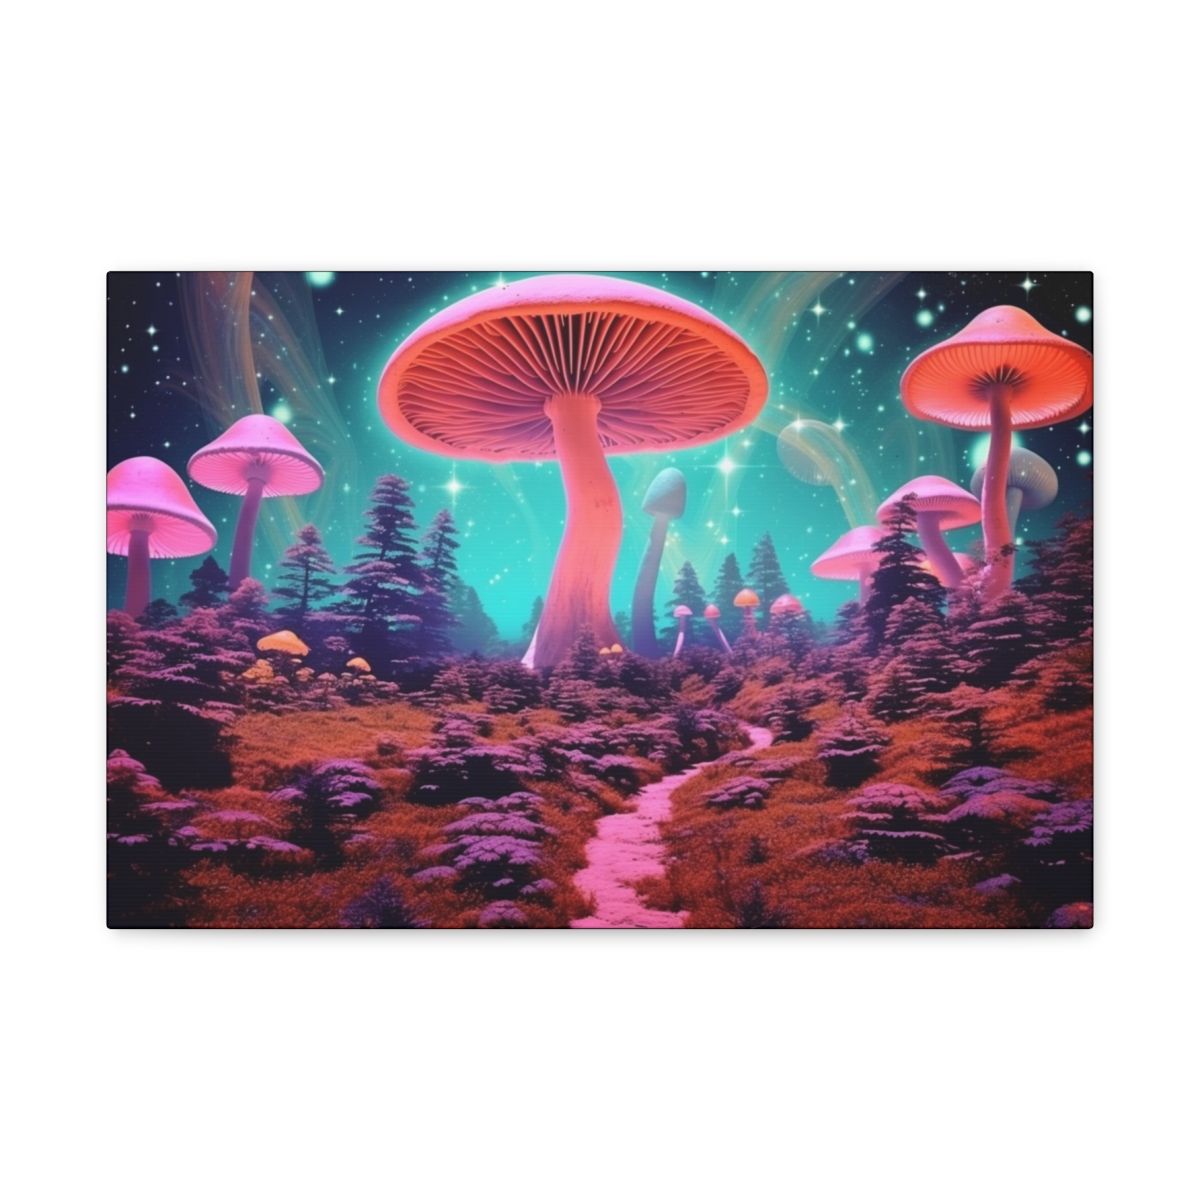 Dreamy Mushroom Art Canvas Print: Worlds Beyond Us